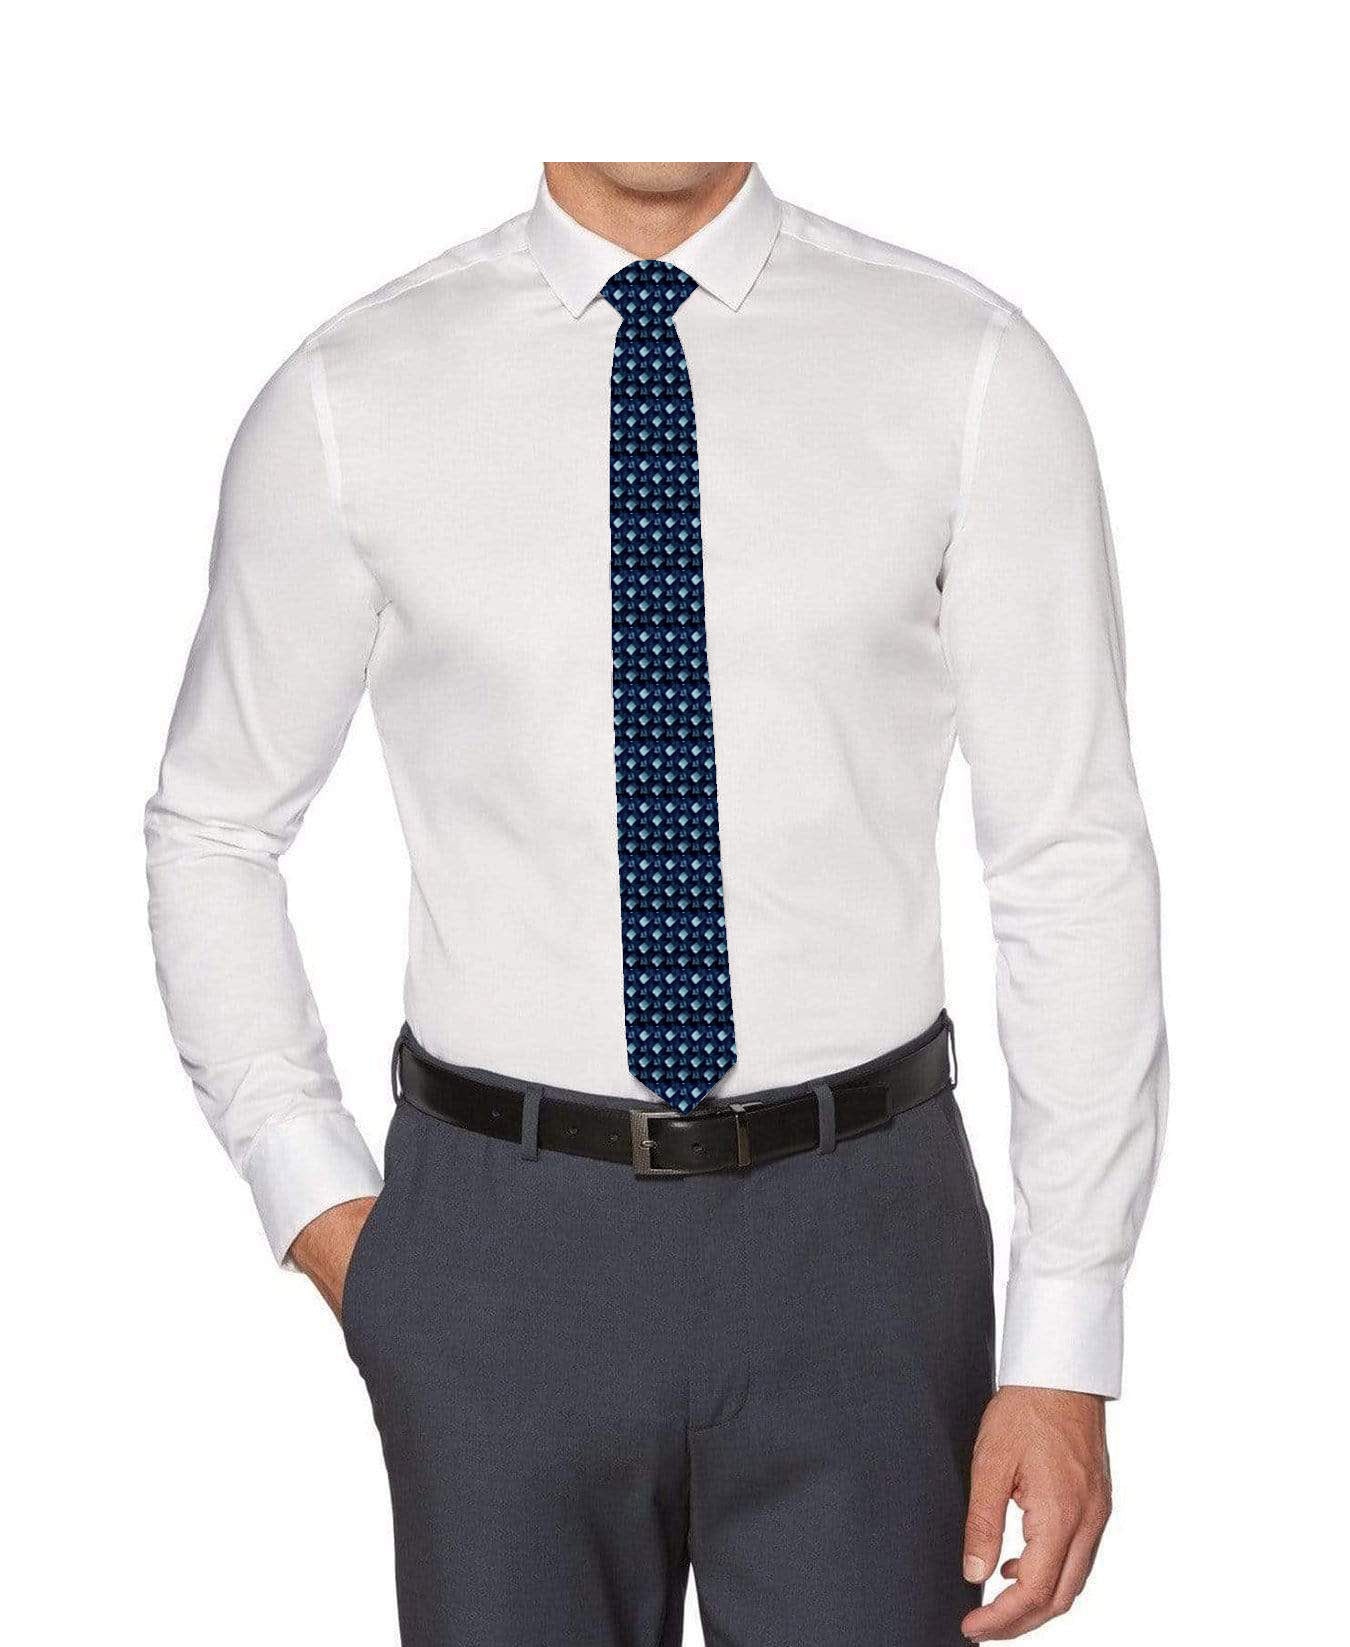 Perry Ellis Boys Dress Shirts w Indigo Tie Solid Shirts w Patterned Tie